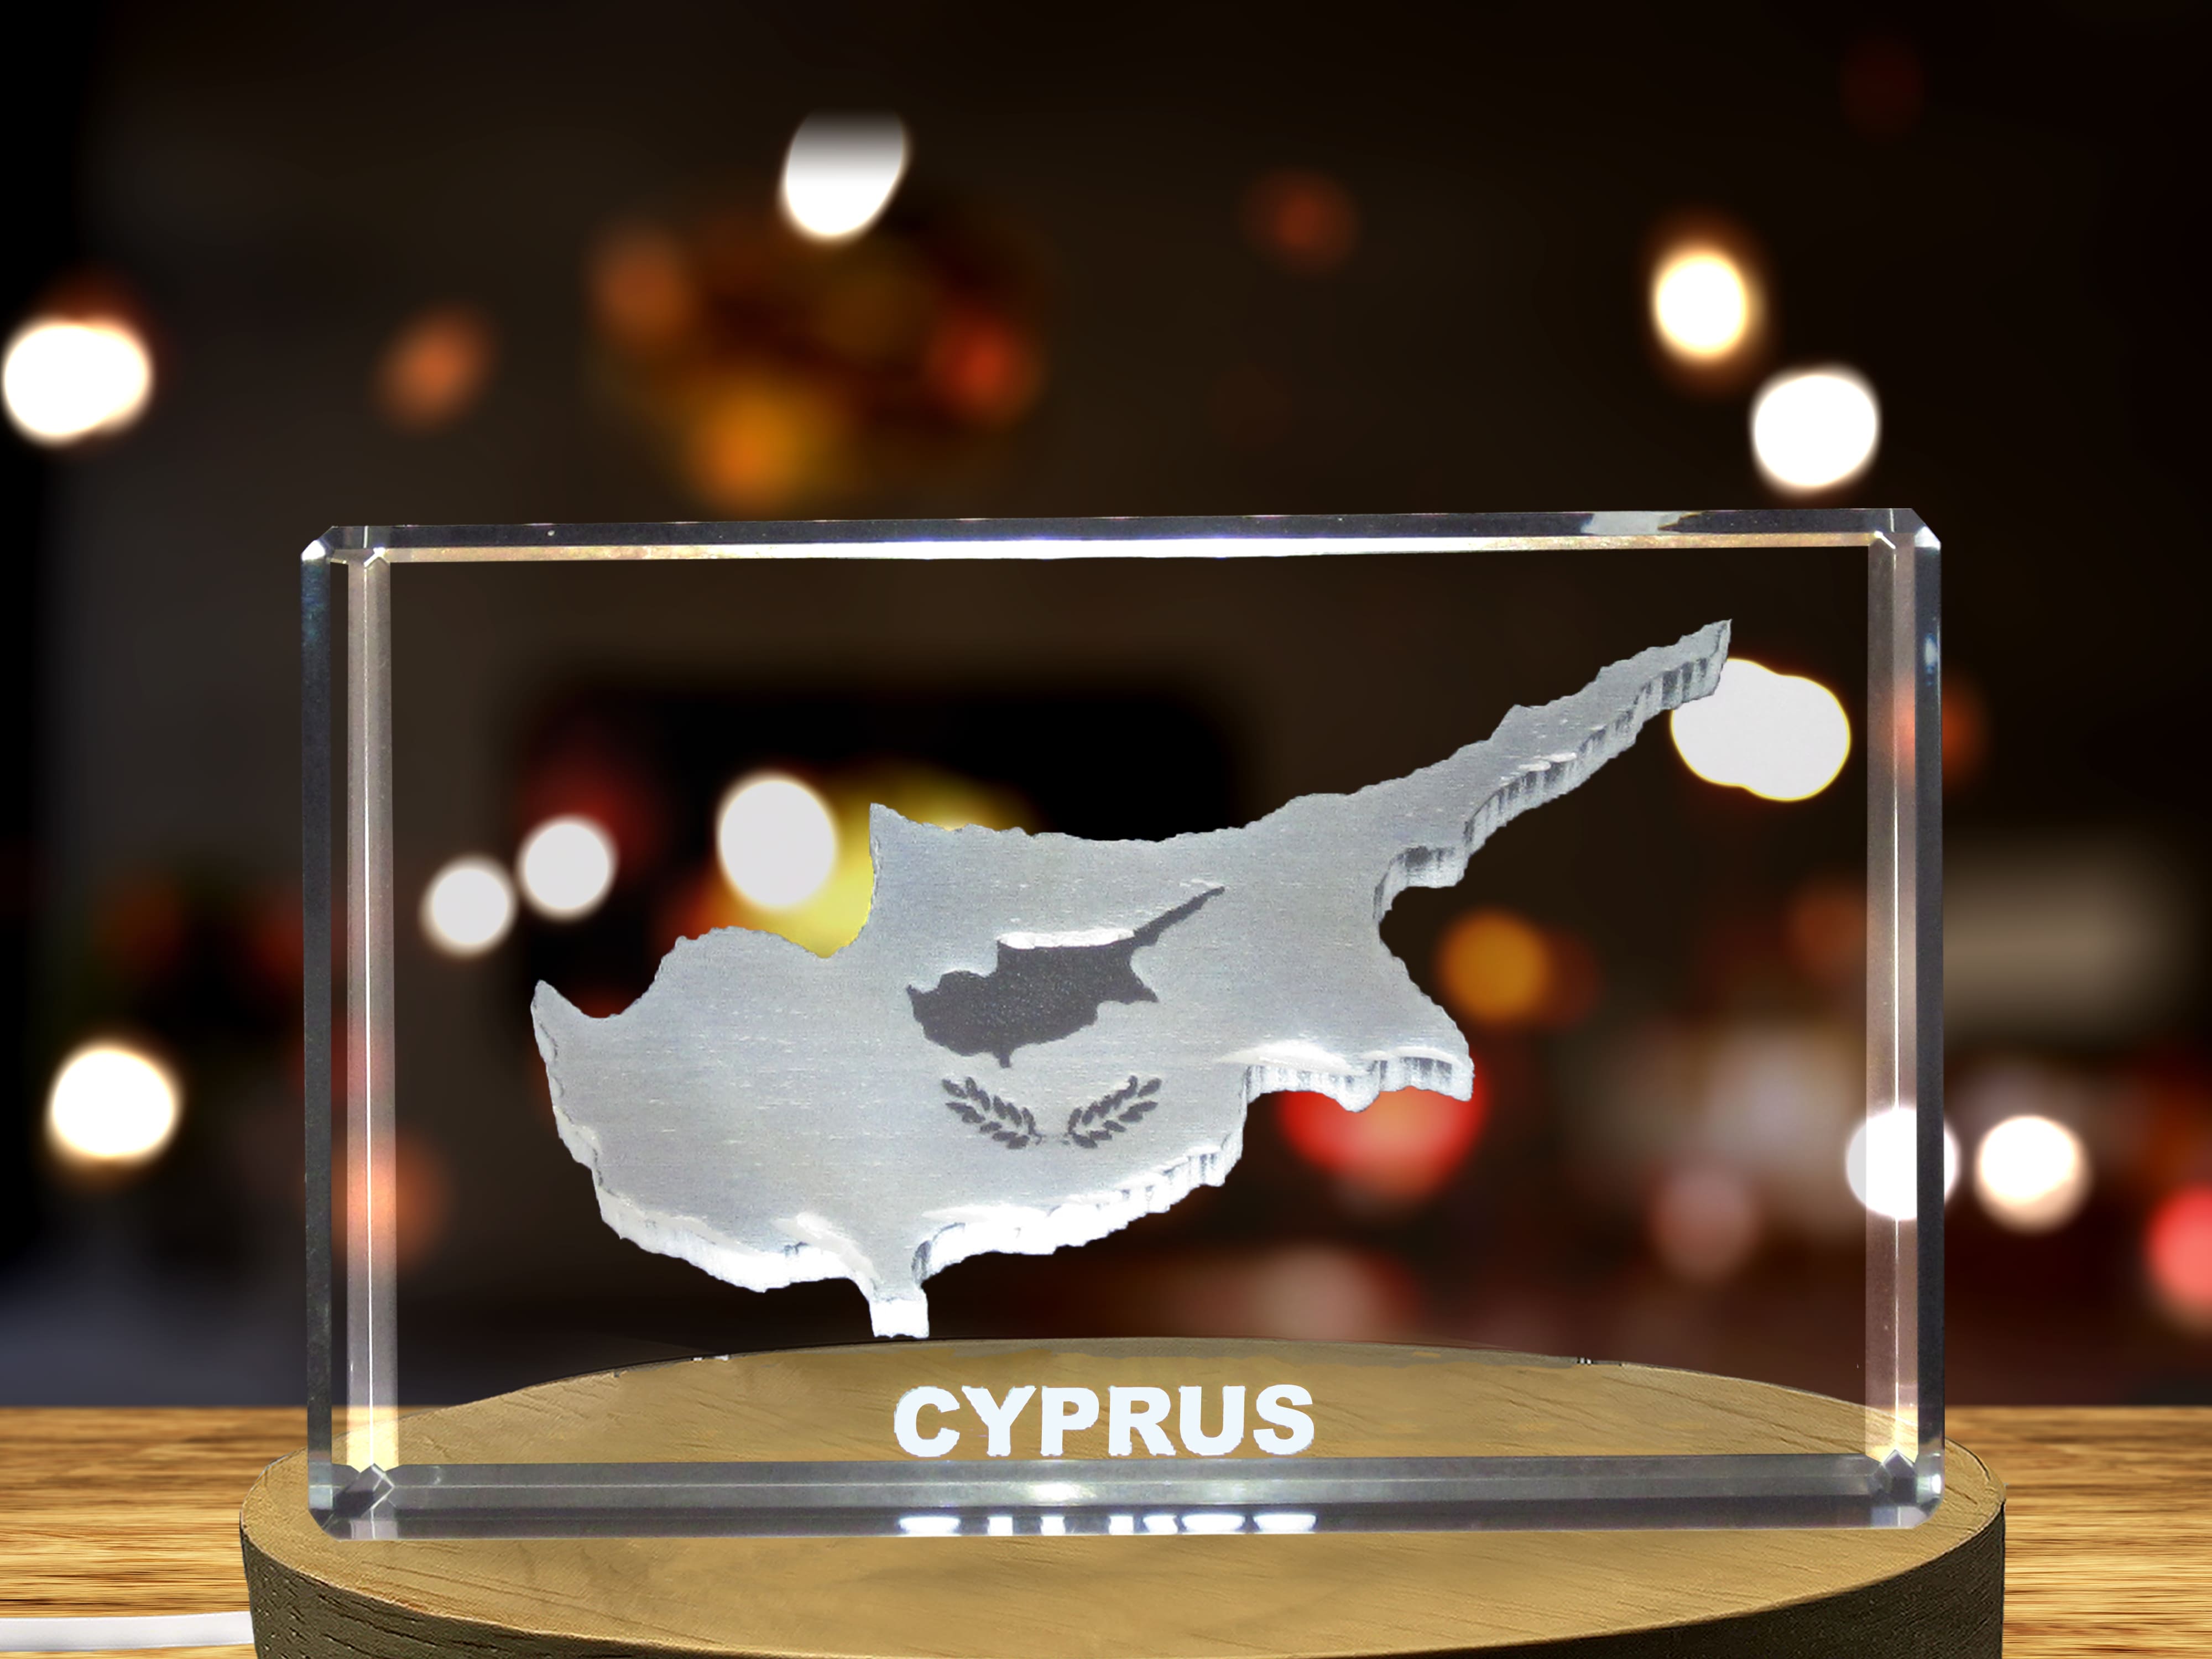 Cyprus 3D Engraved Crystal 3D Engraved Crystal Keepsake/Gift/Decor/Collectible/Souvenir A&B Crystal Collection